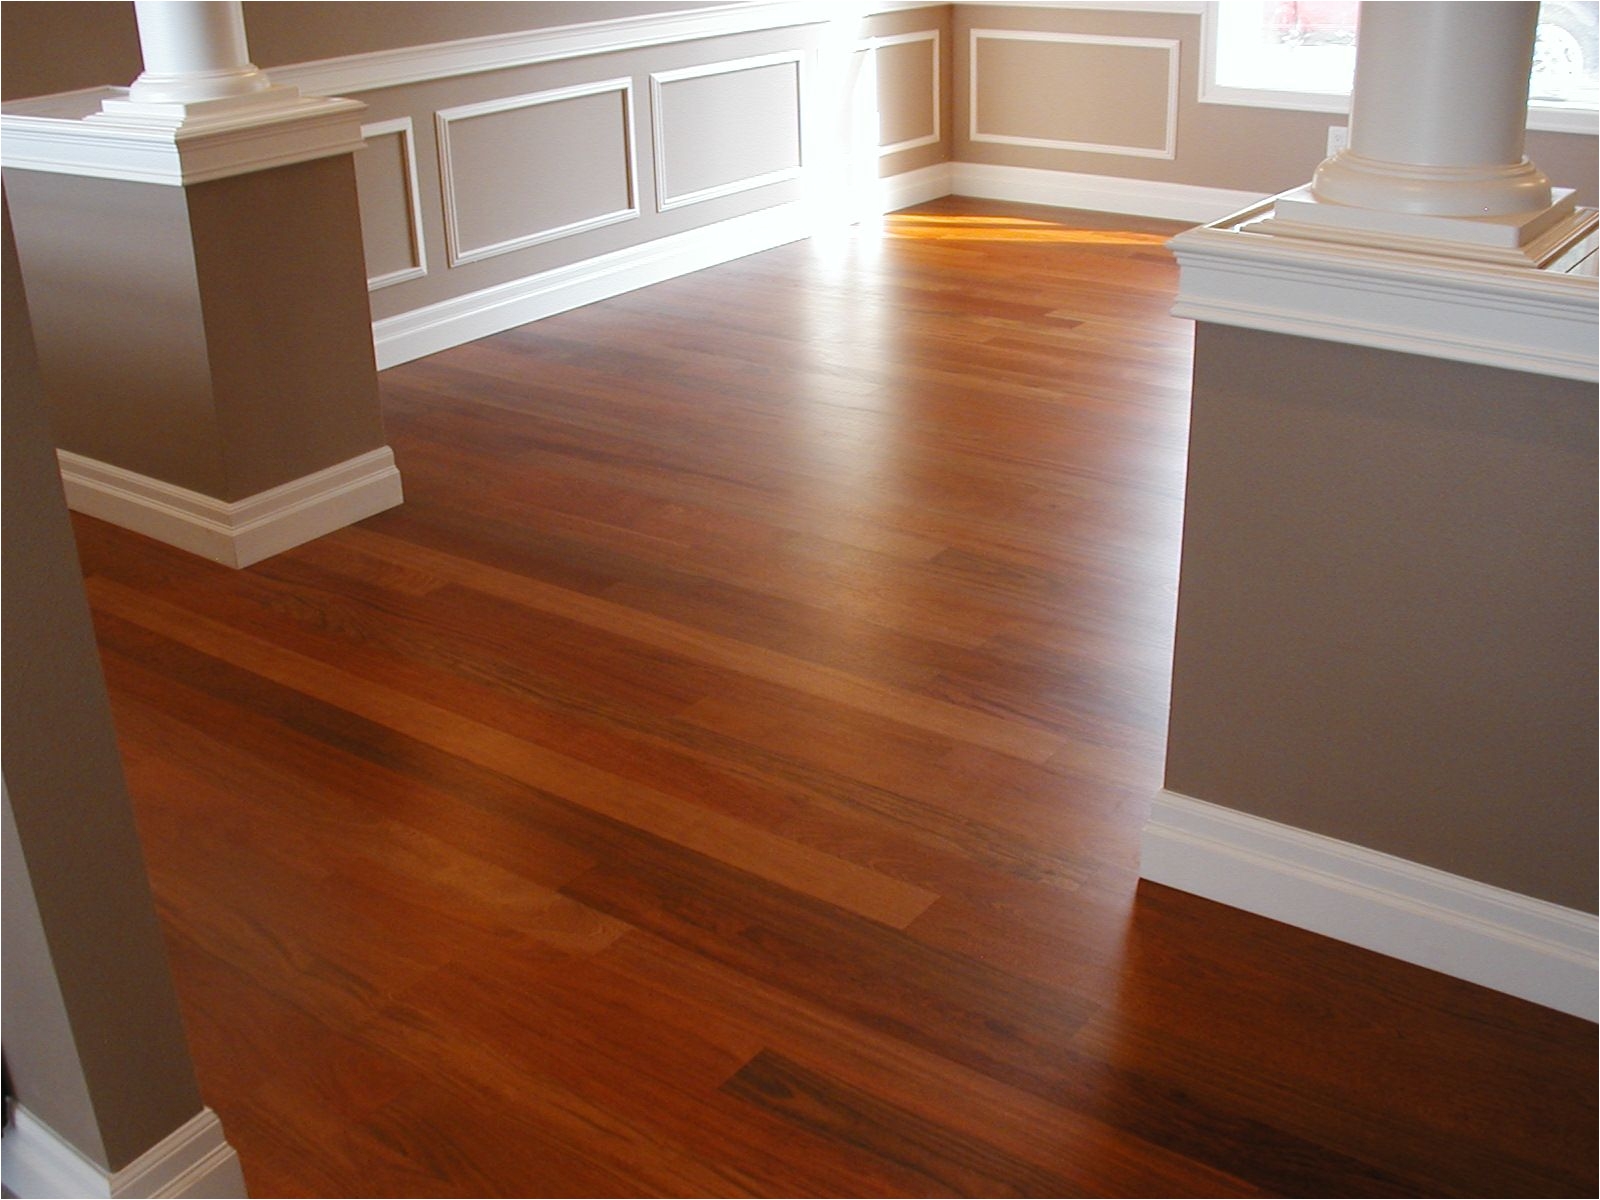 brazilian cherry floors in kitchen help choosing harwood floor color laminate hardwood cabinet colors